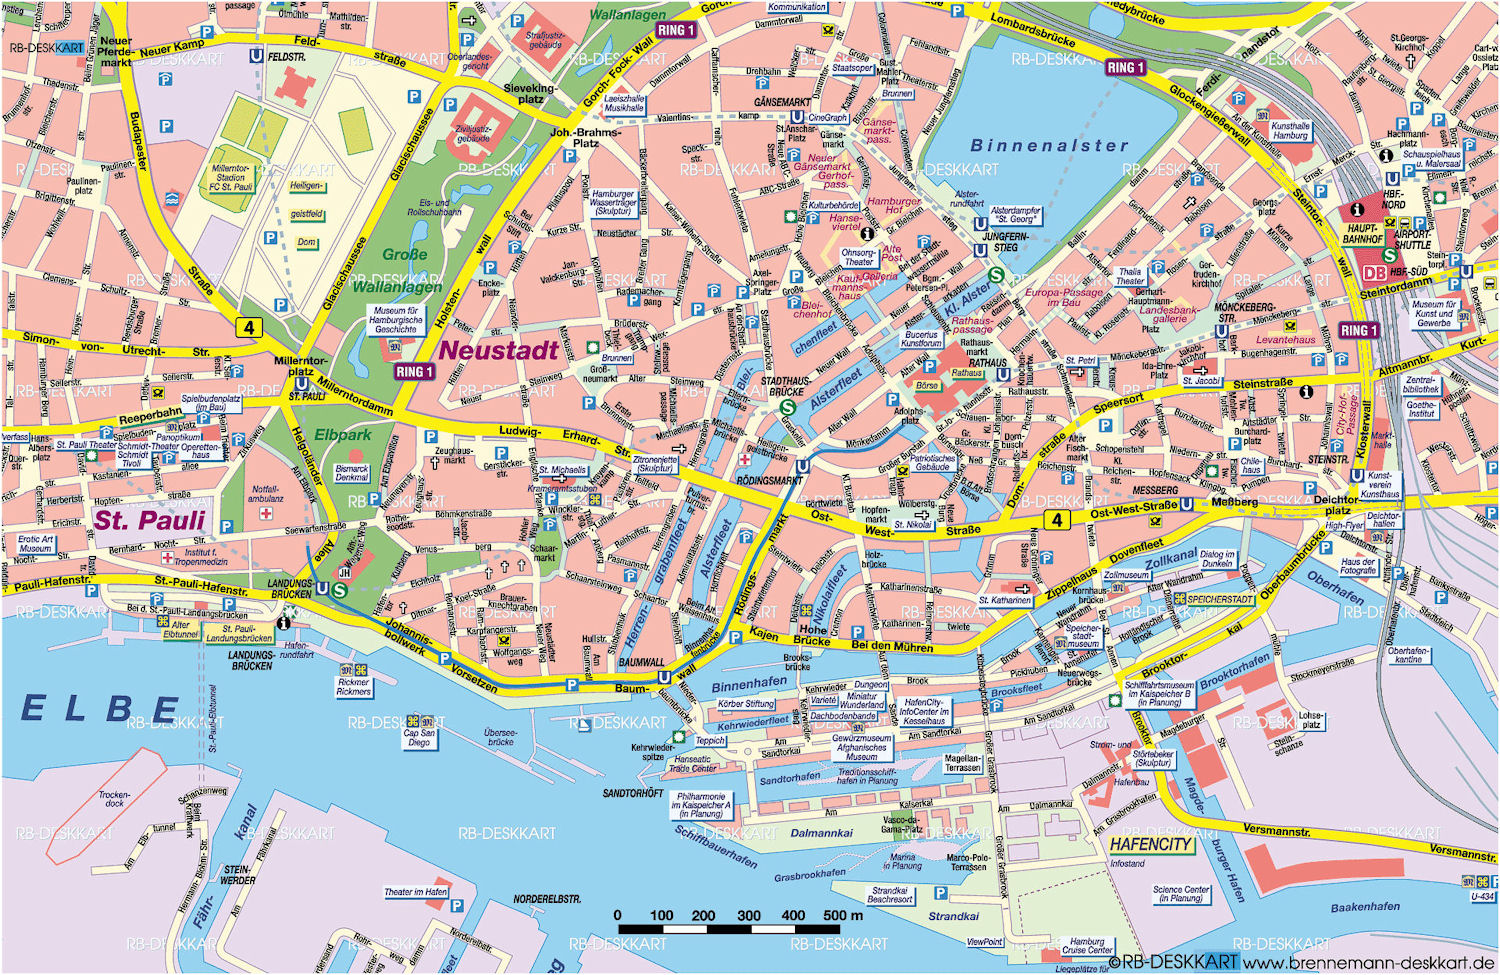 Guide to Bach Tour: Hamburg - Maps